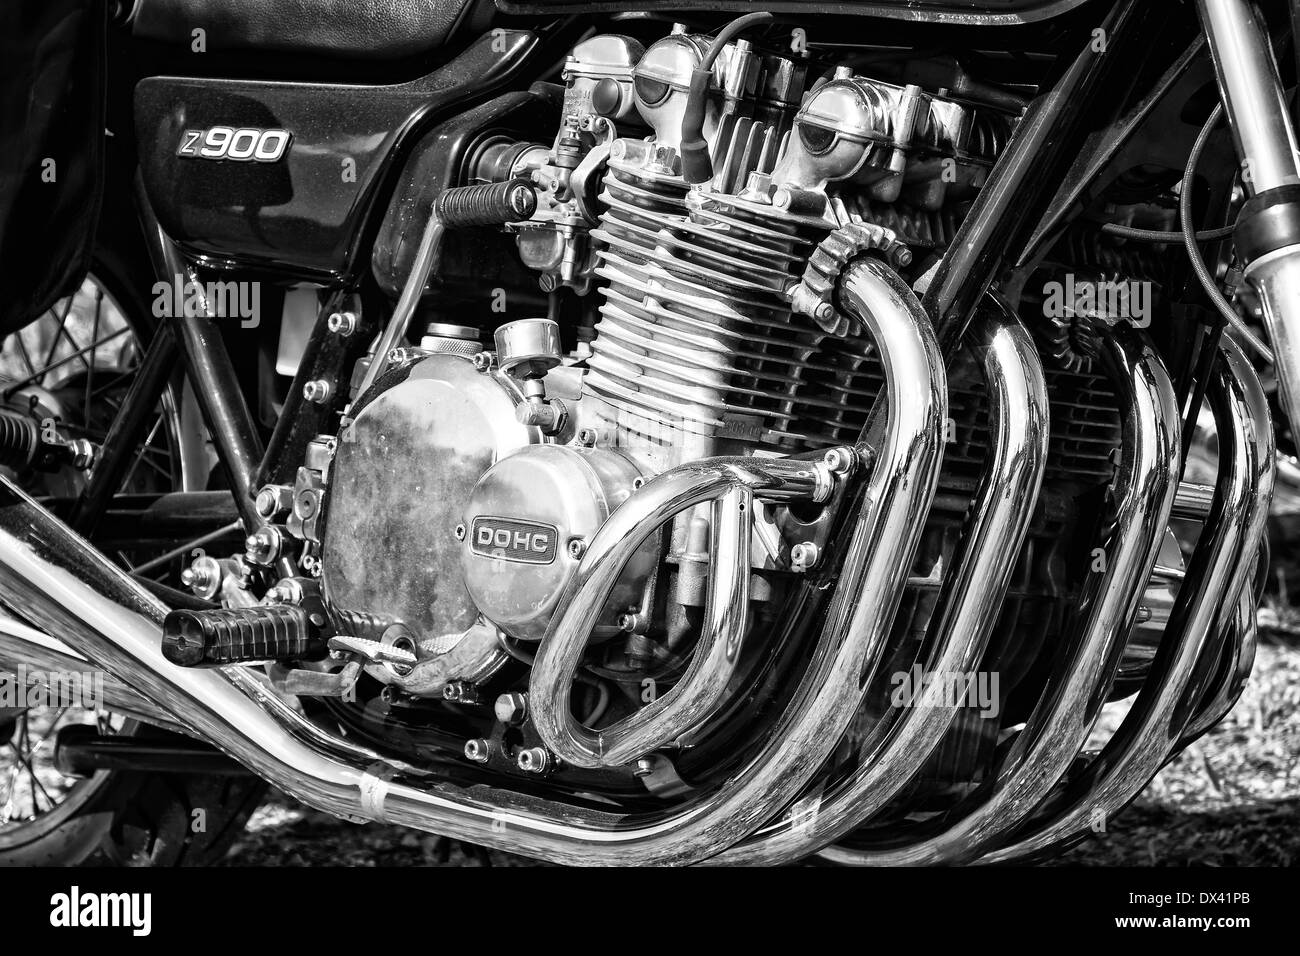 Close-up of motorcycle engine Kawasaki Z900, black and white Stock Photo -  Alamy